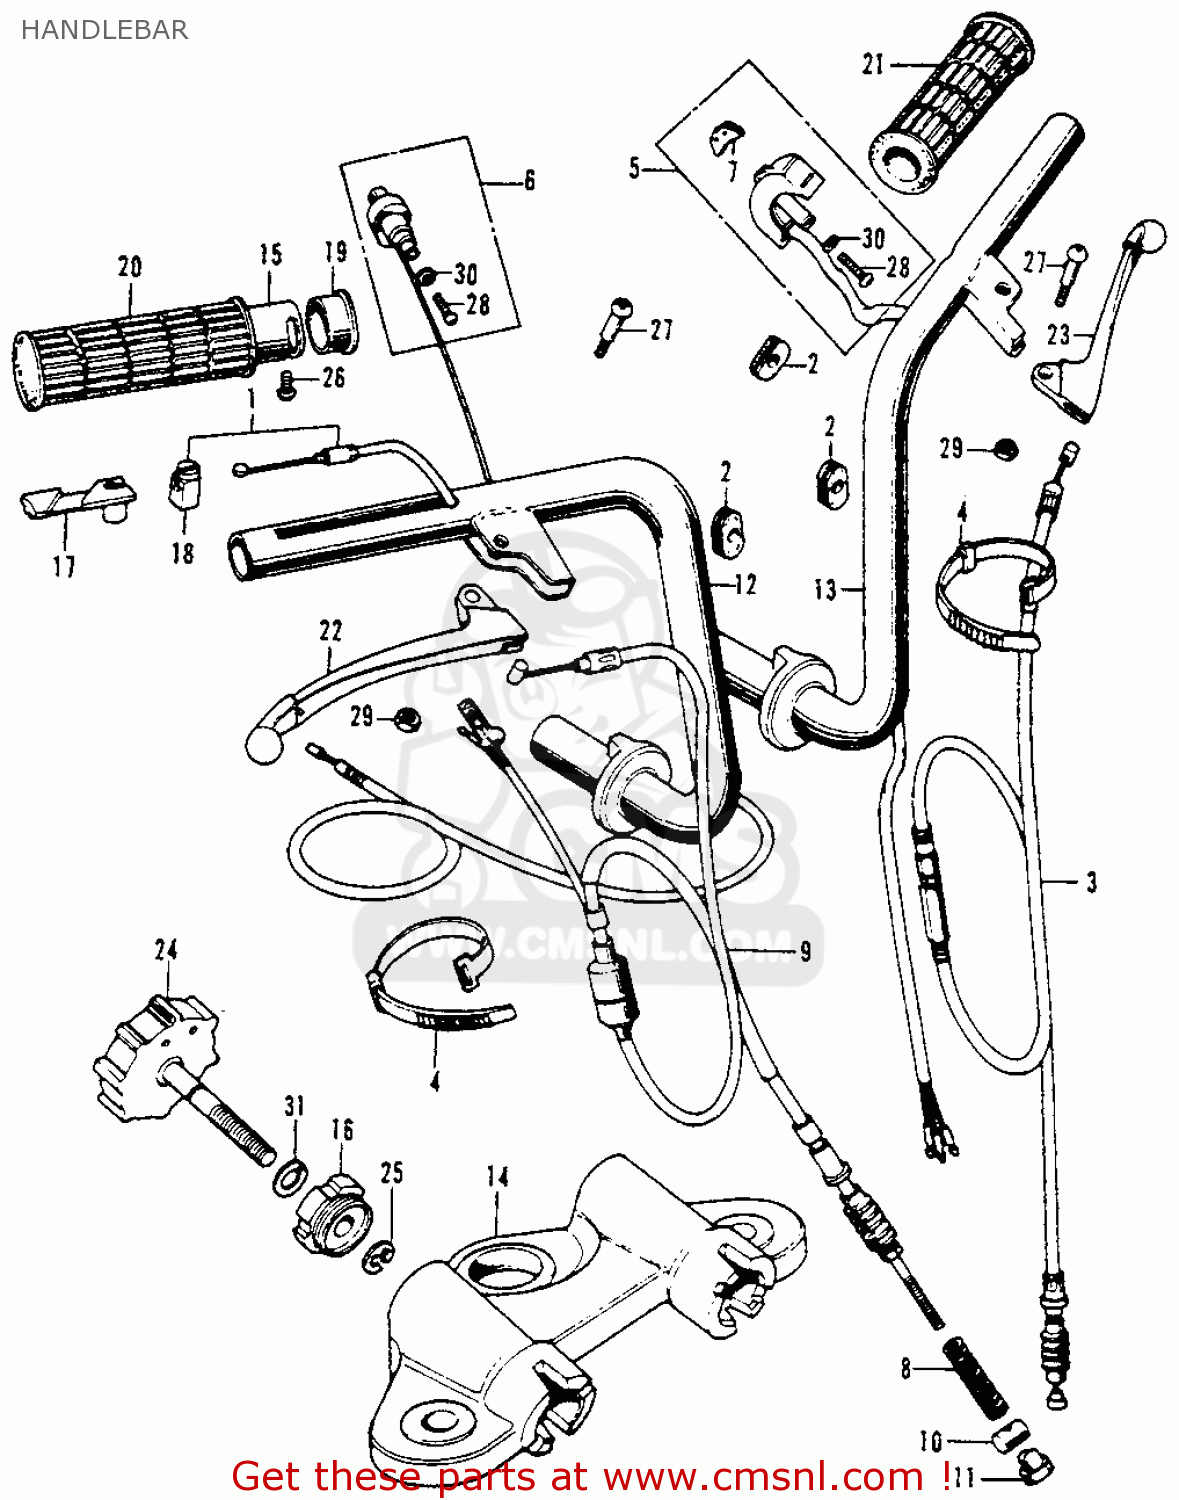 Honda ct70 shop manual pdf